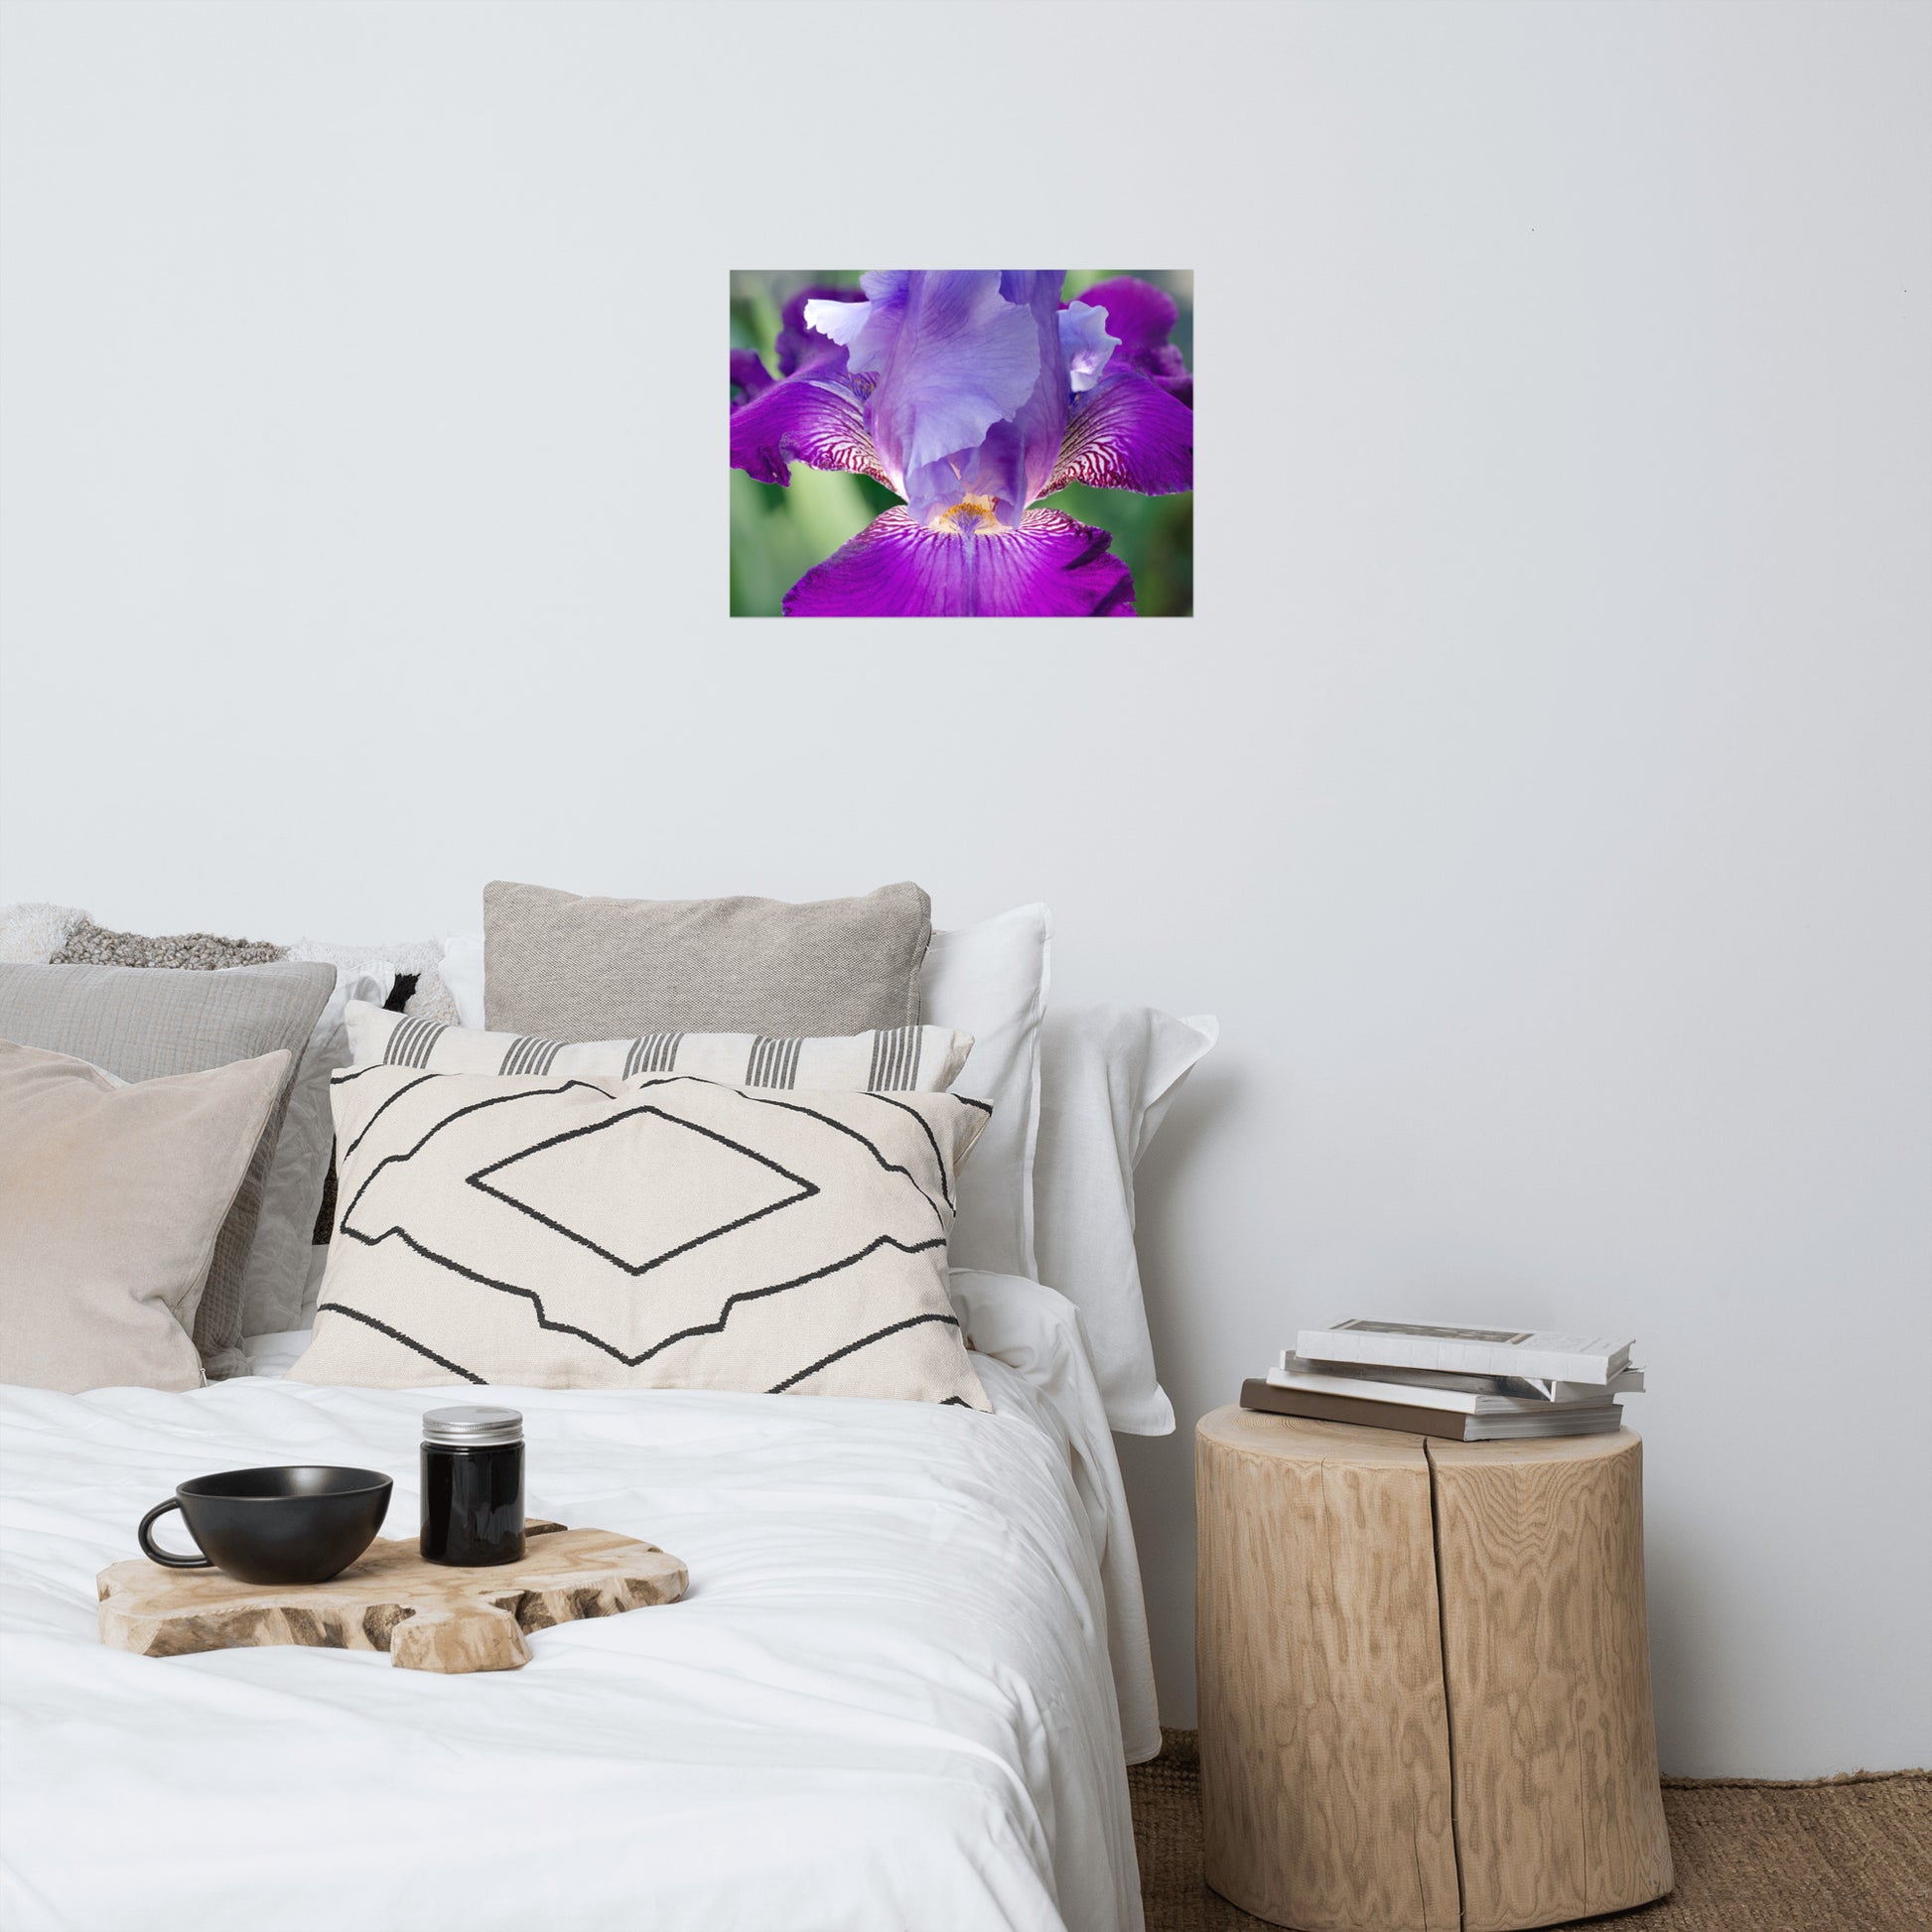 Large Bedroom Posters: Glowing Iris - Botanical / Floral / Flora / Flowers / Nature Photograph - Loose / Frameable / Unframed / Frameless Wall Art Print - Artwork